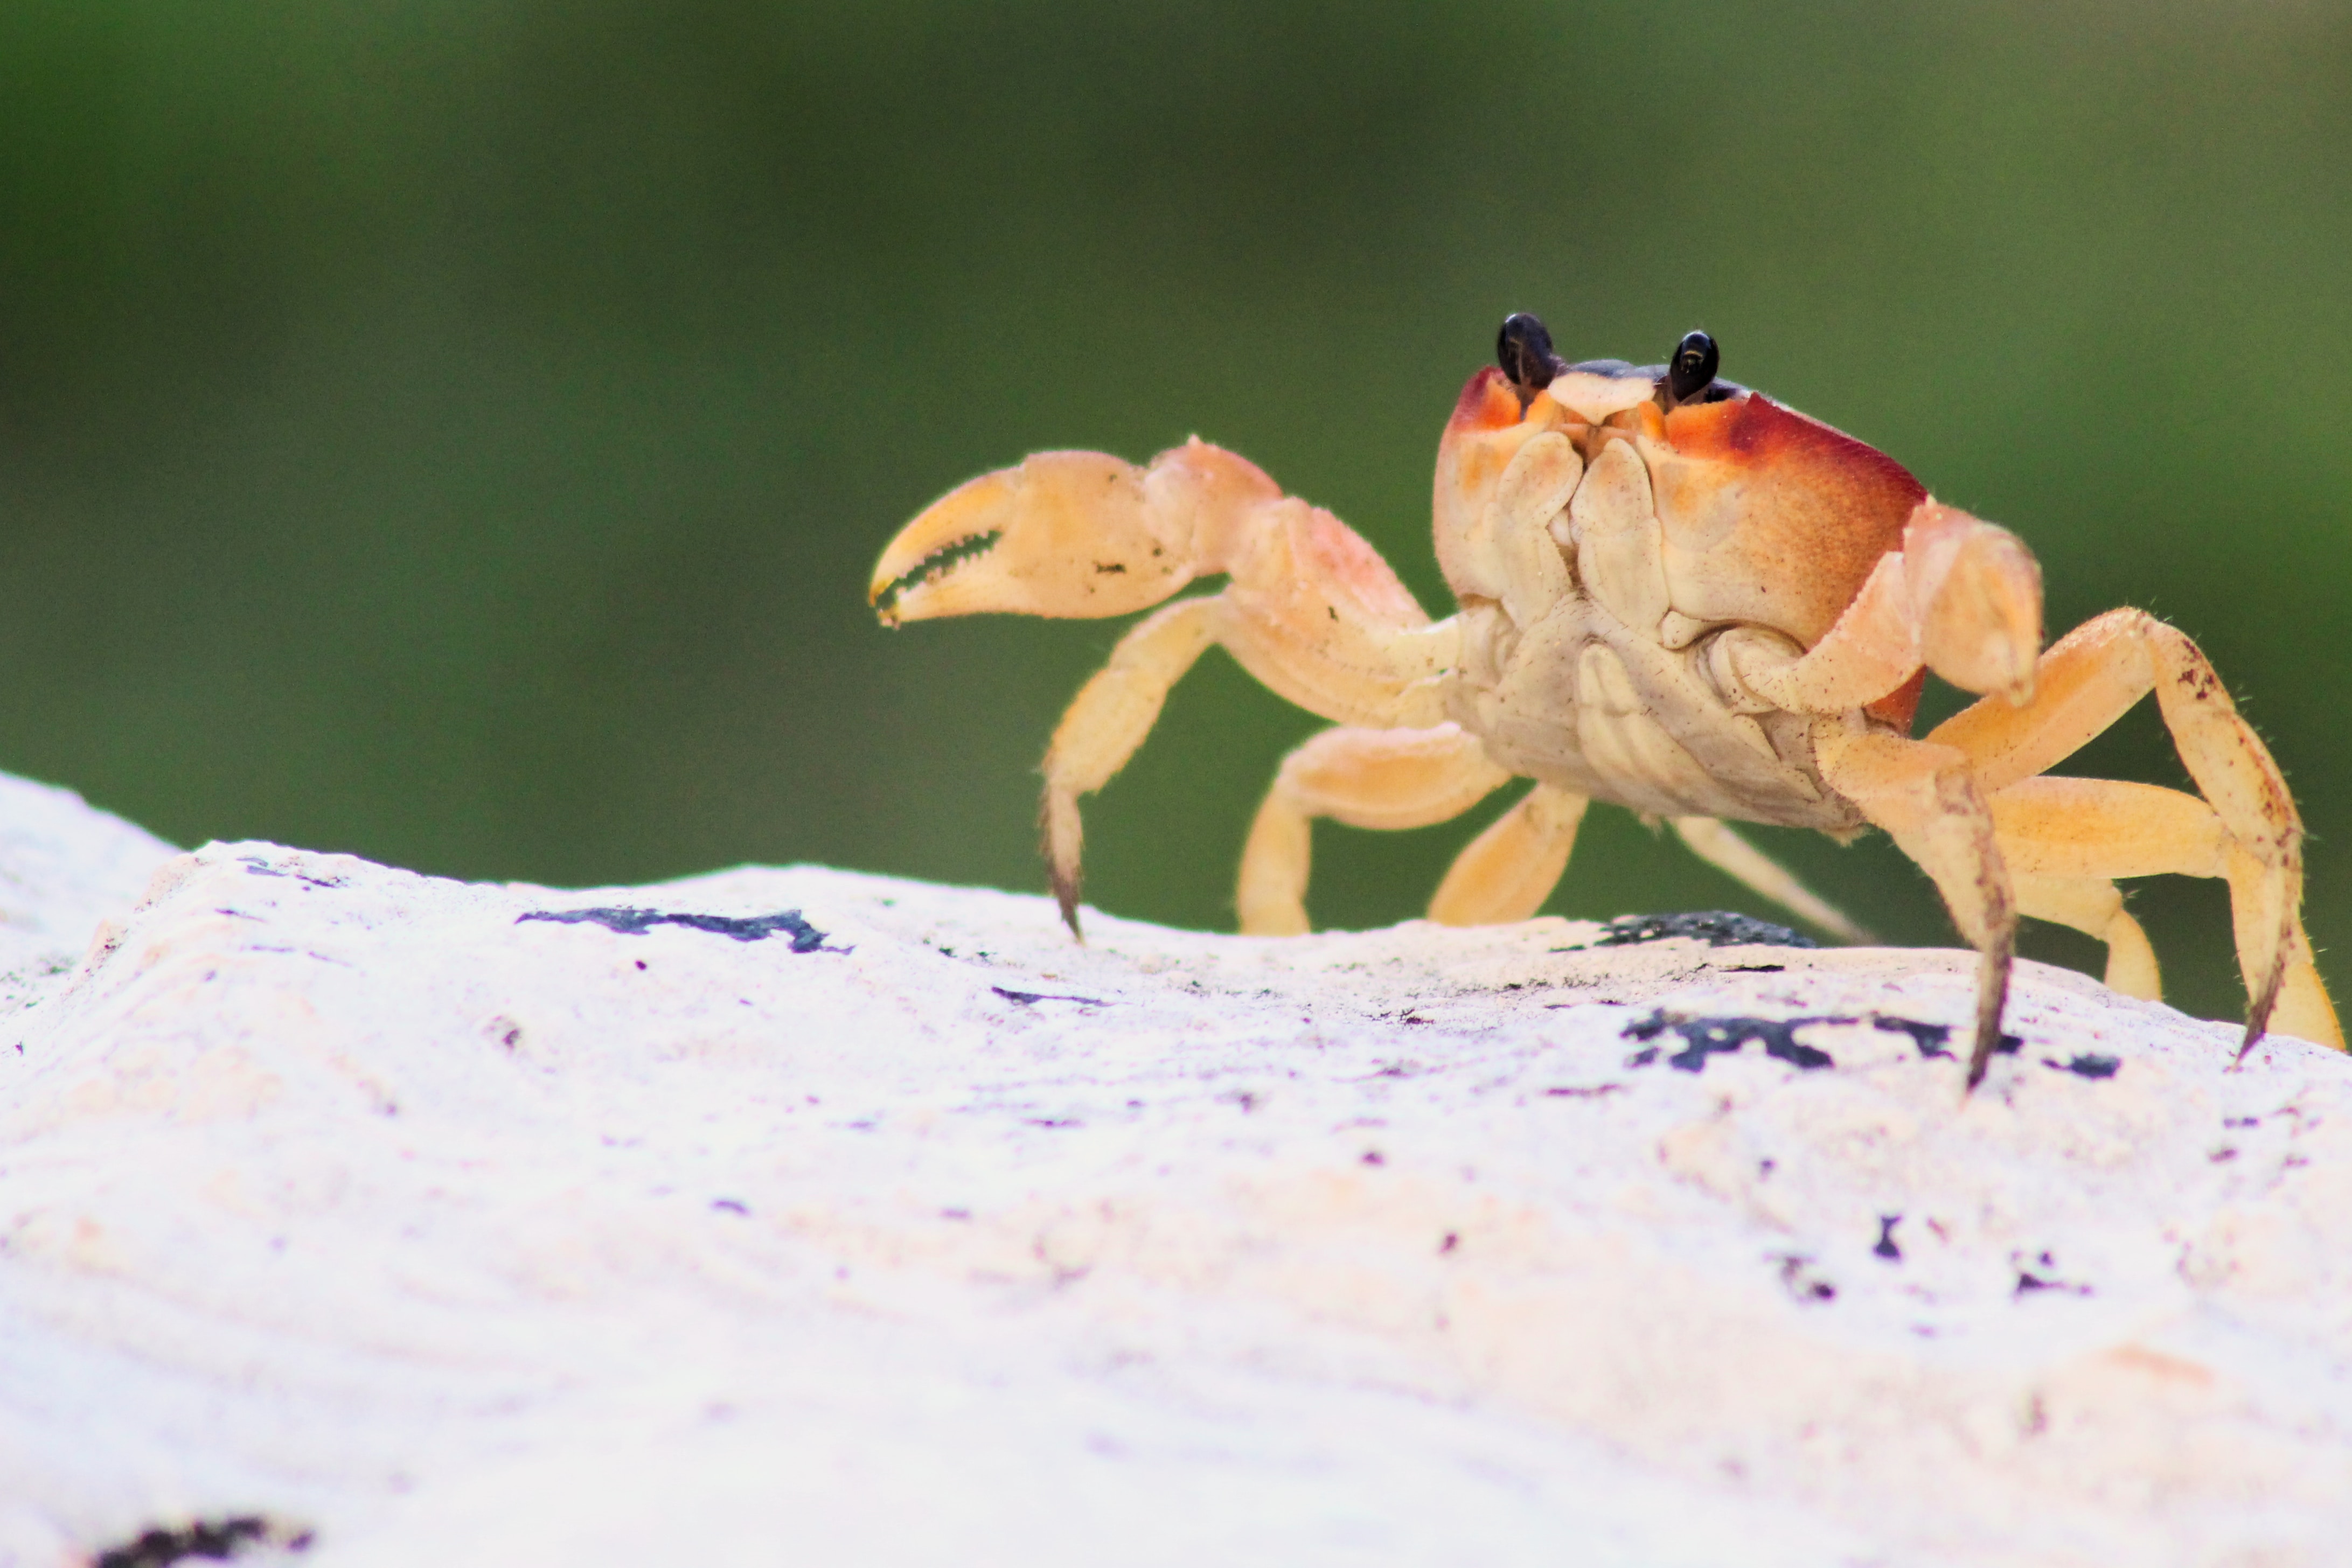 A crab in the sand, representing Ferris, the Rust mascot